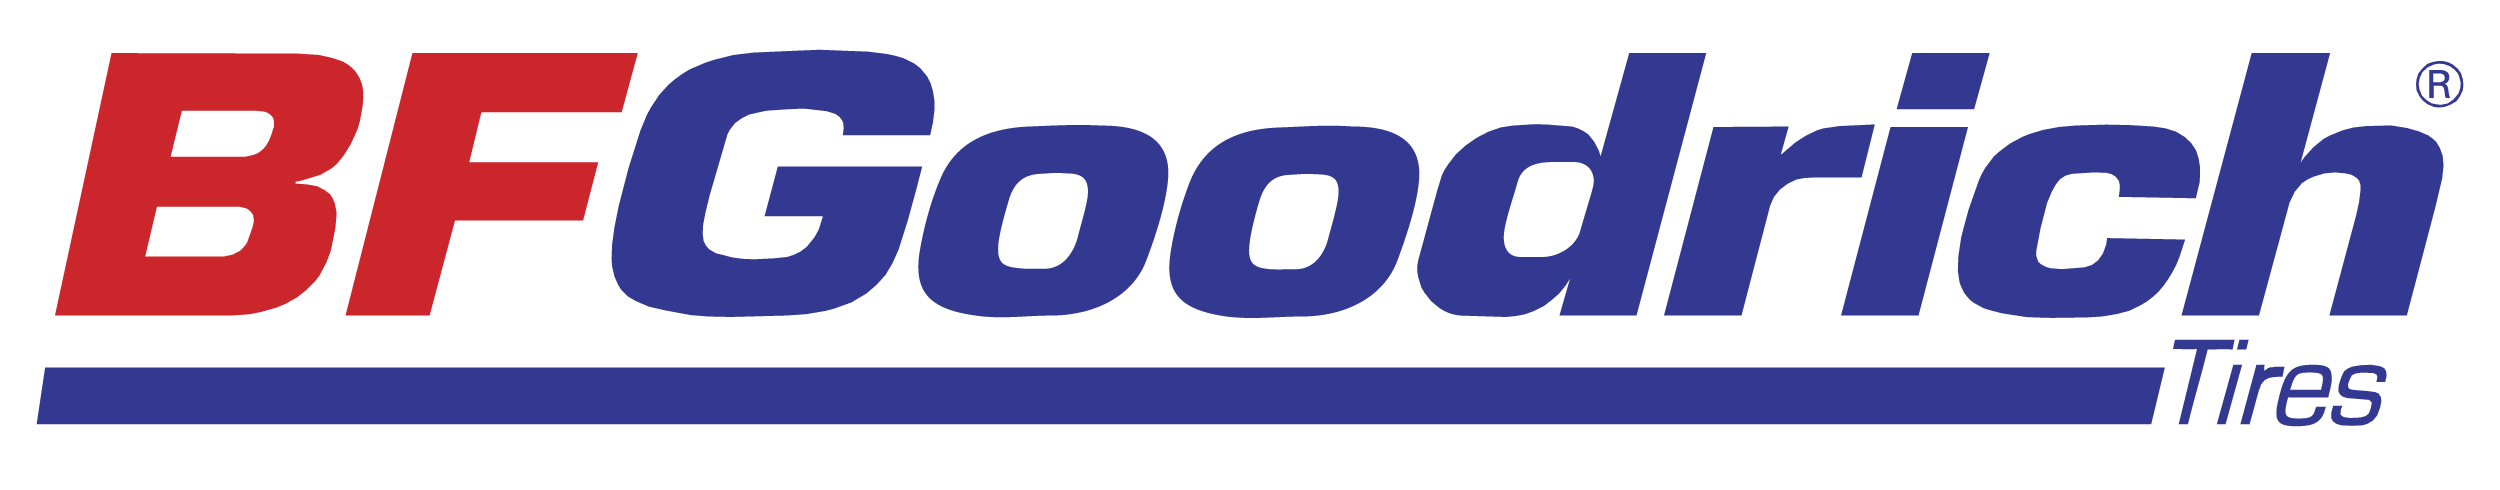 bf-goodrich-logo-vector